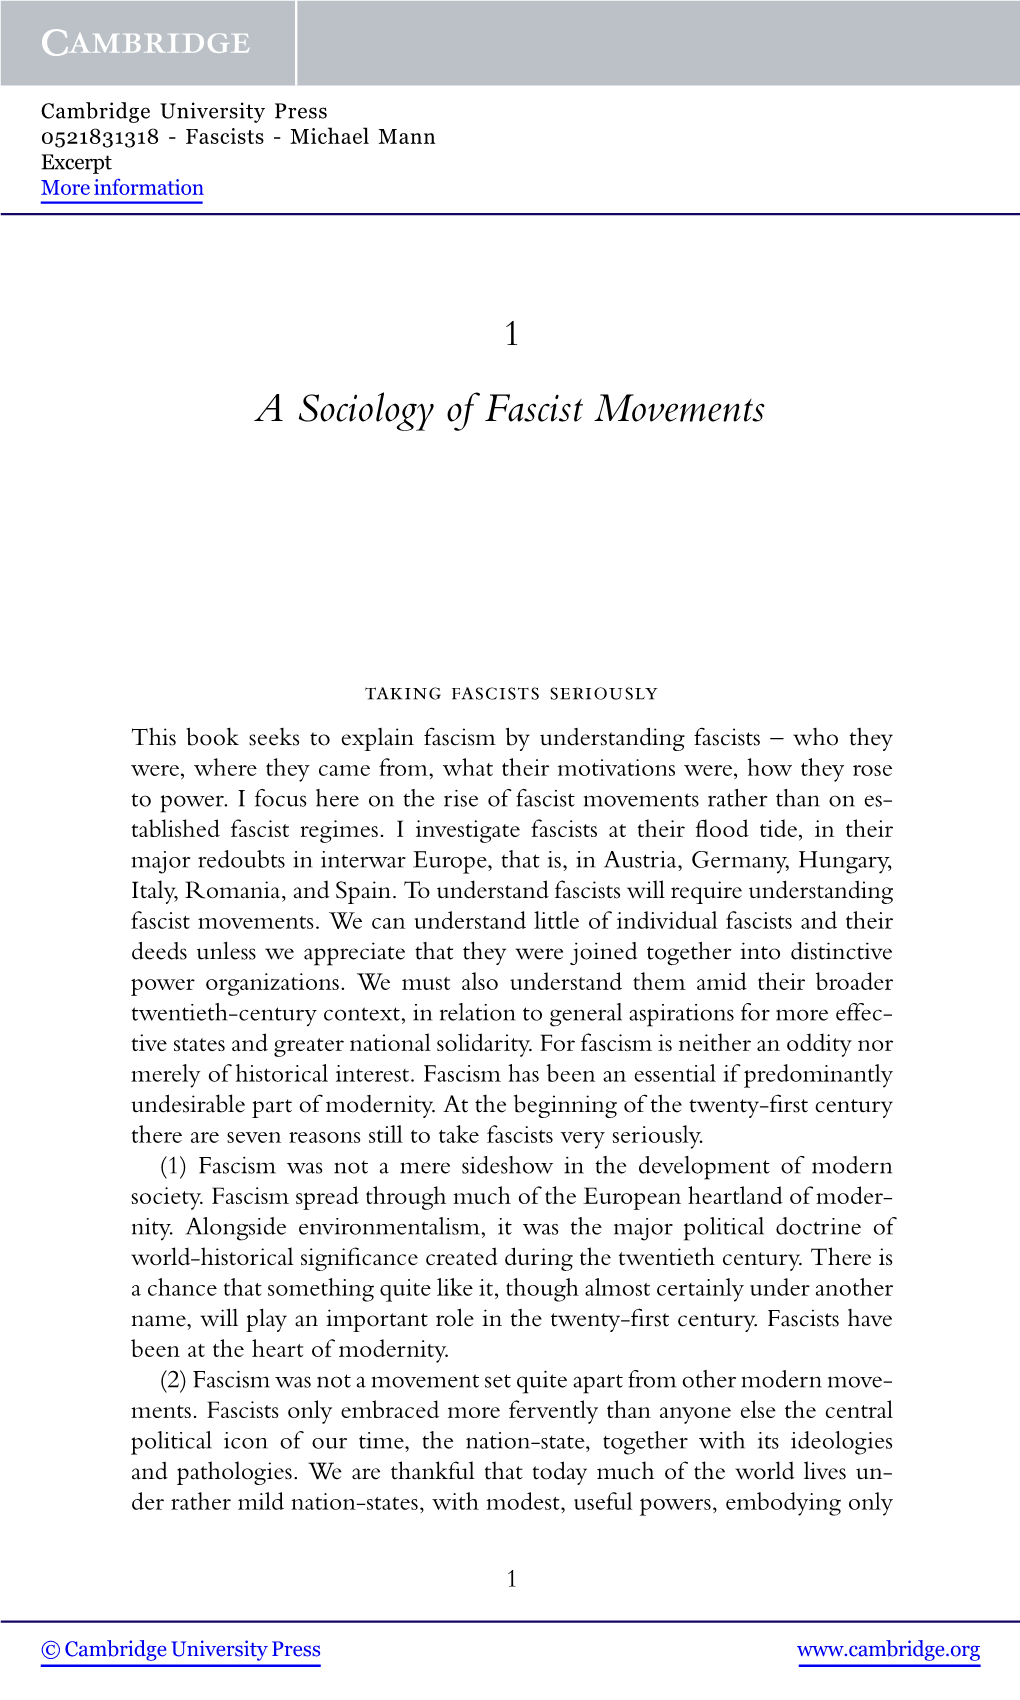 A Sociology of Fascist Movements